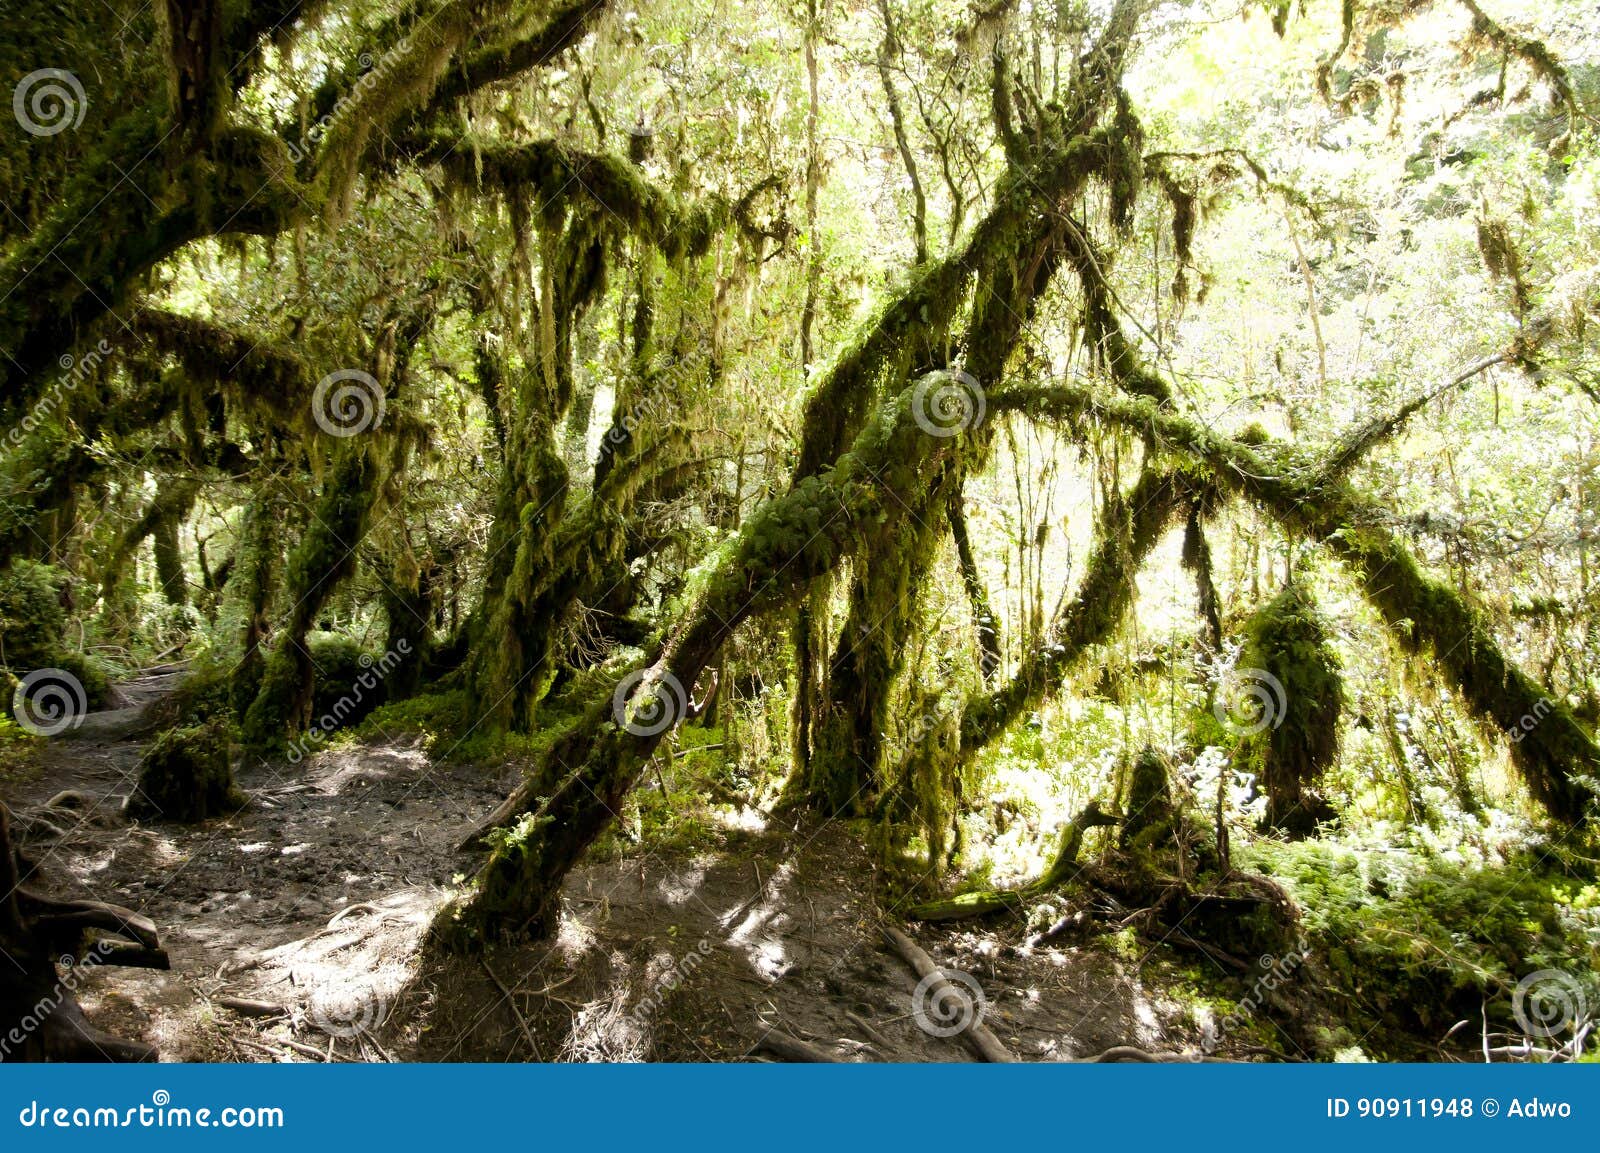 enchanted forest - queulat national park - chile